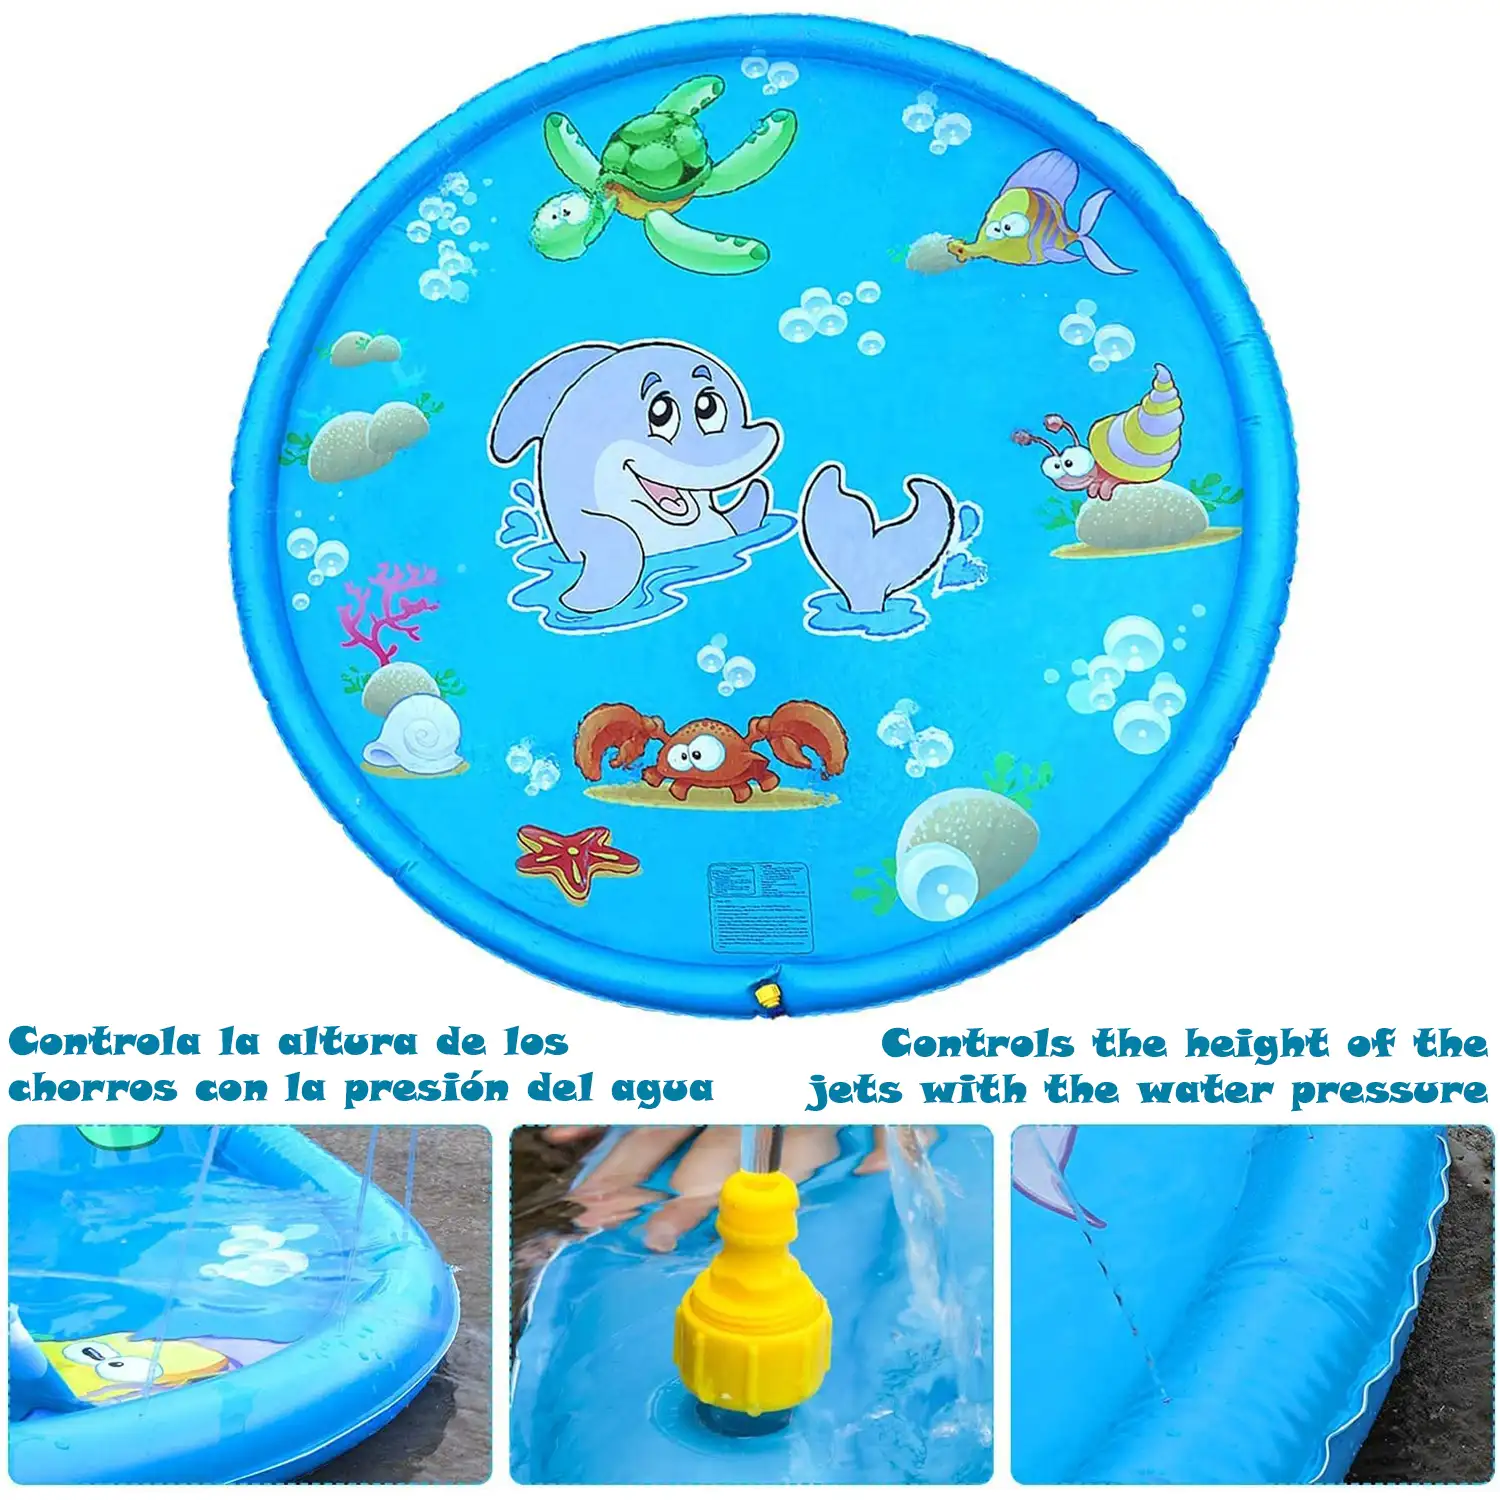 Splash Pad. Juguete inflable con aspersor de agua para jugar. 150cm de diámetro. Diseño animales acuáticos.